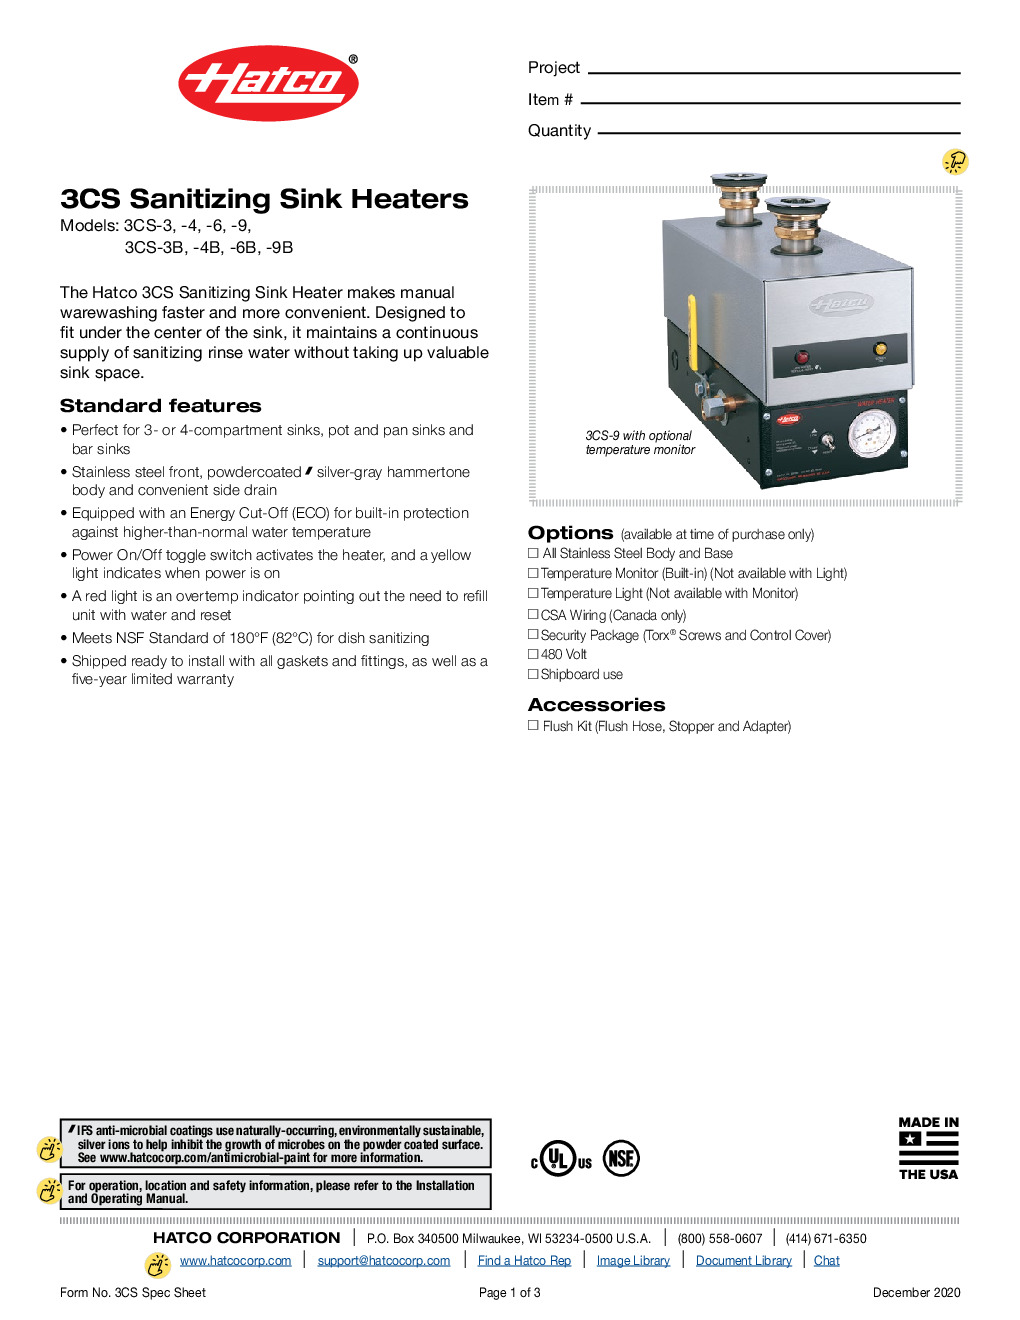 Hatco 3CS-6-QS Electric Sink Heater, 6.0 kW